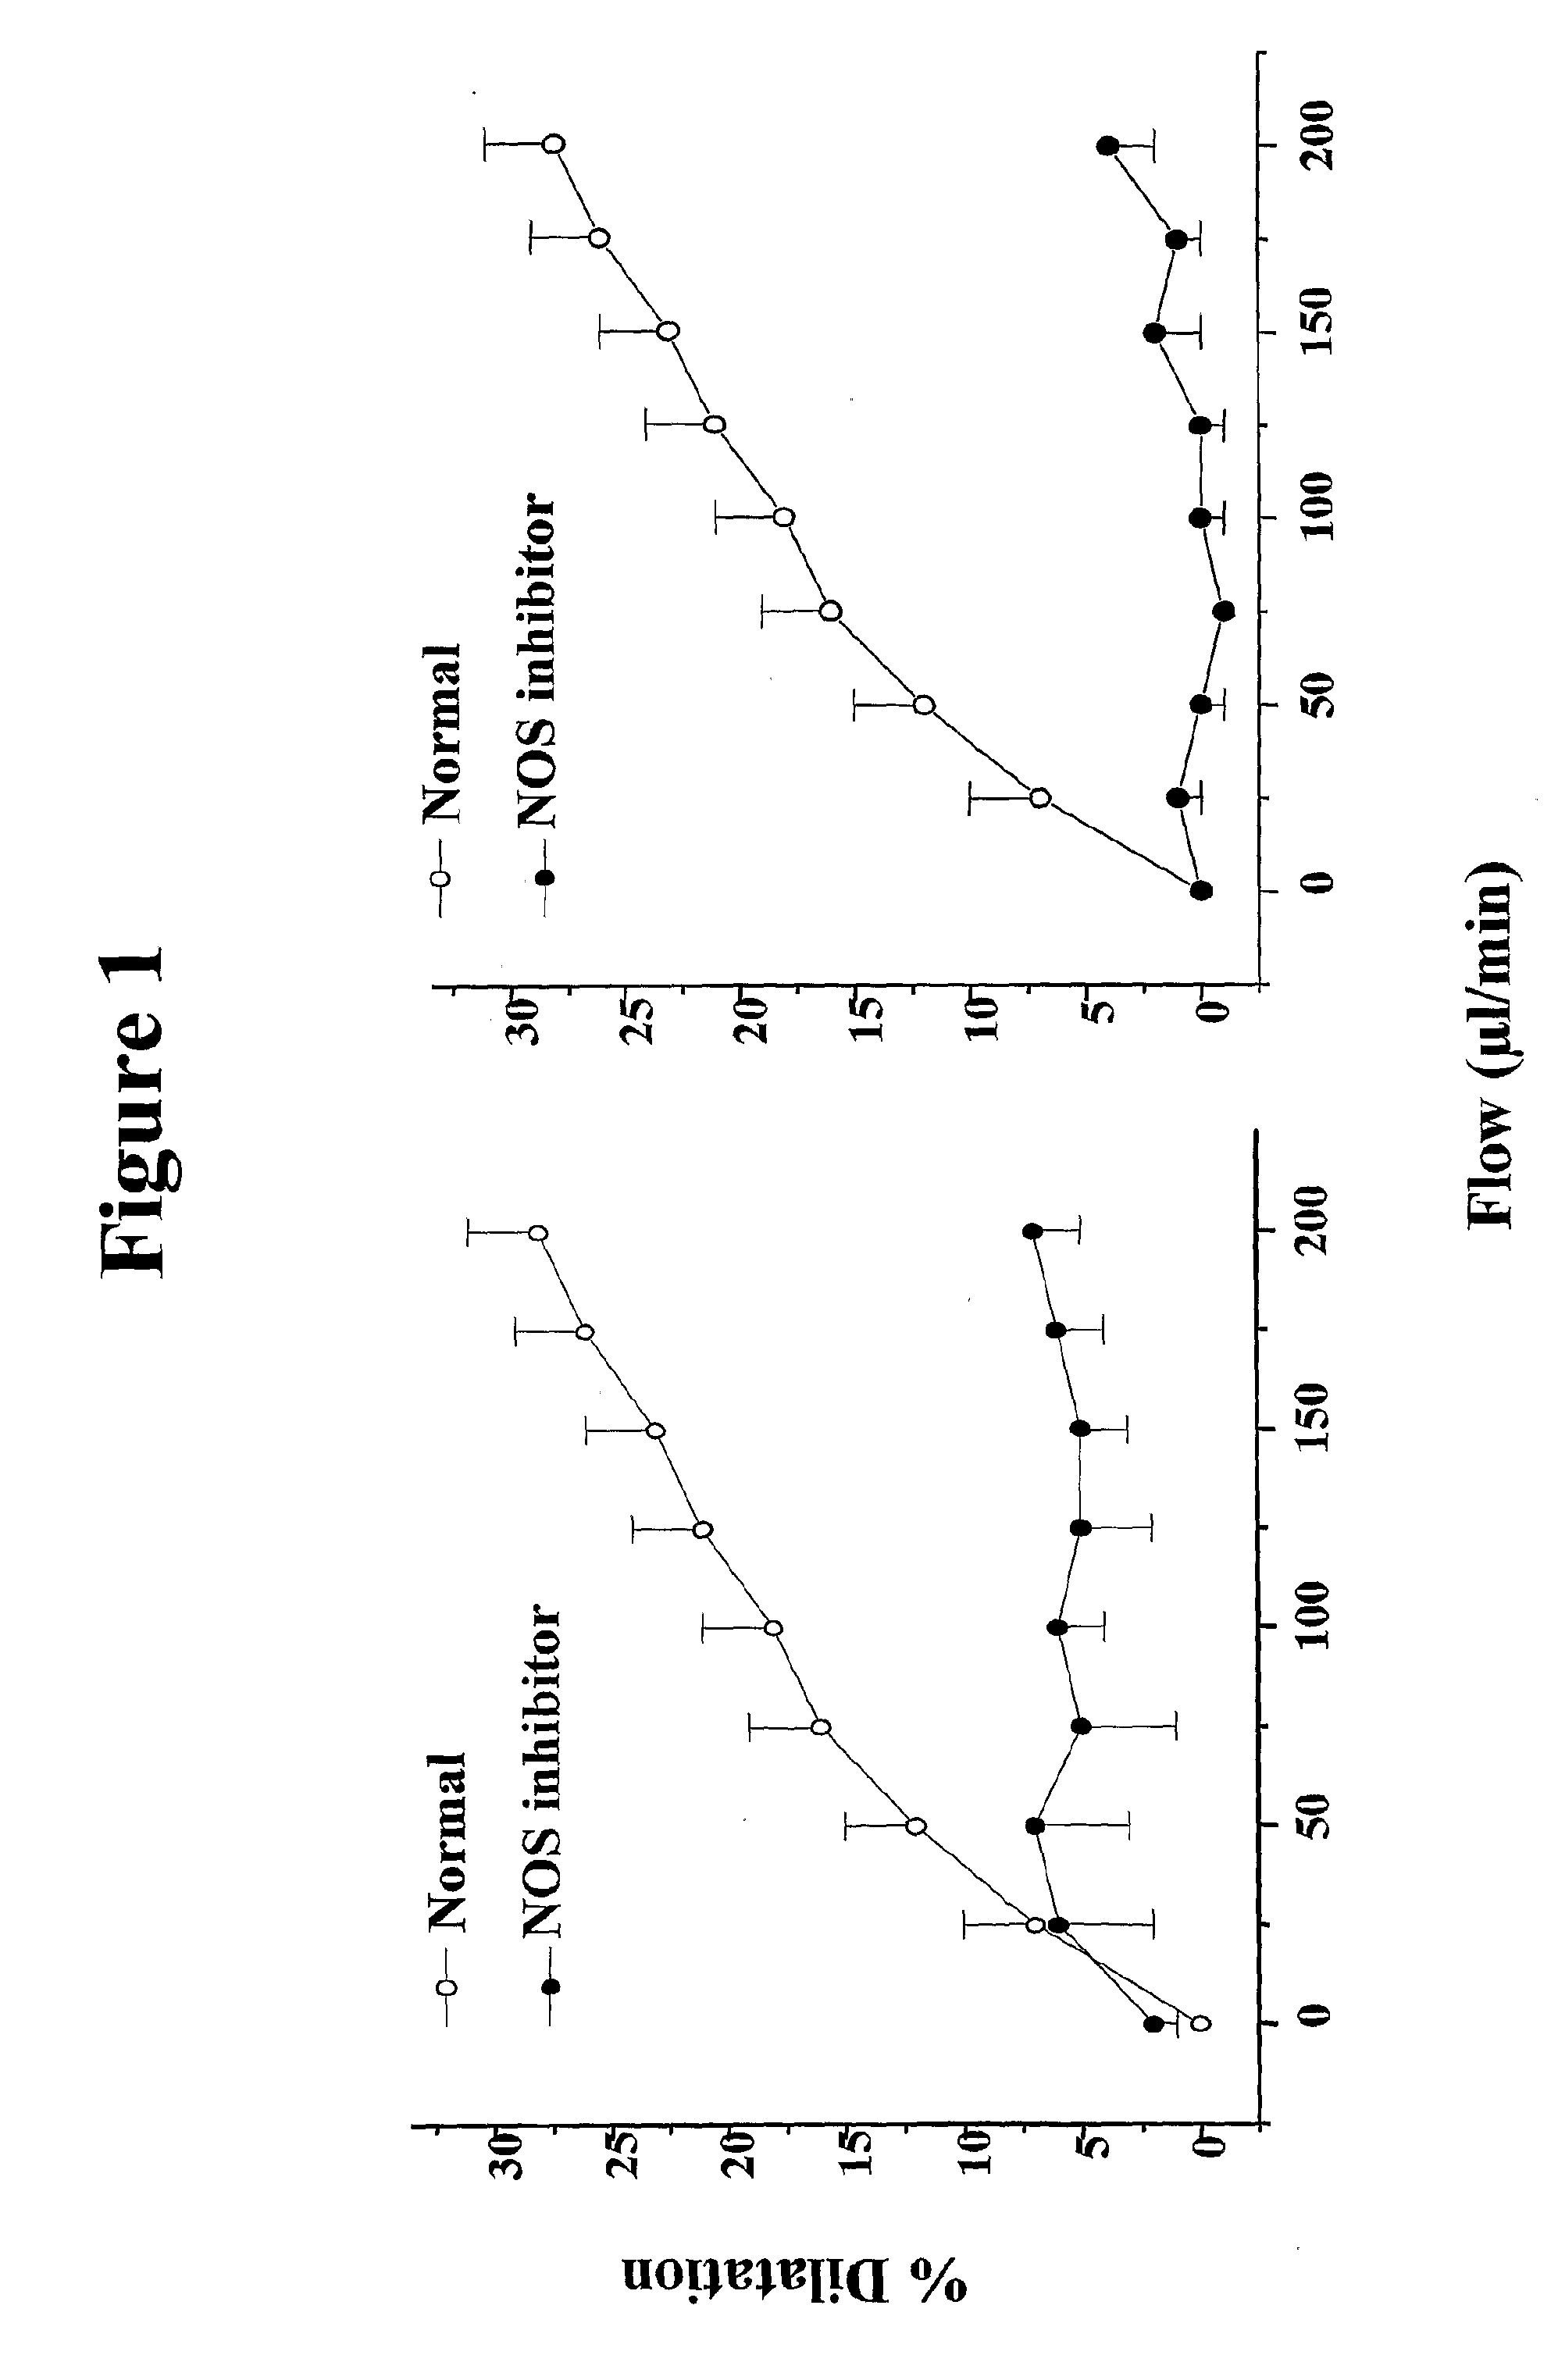 Use of methylene amide derivatives in cardiovascular disorders